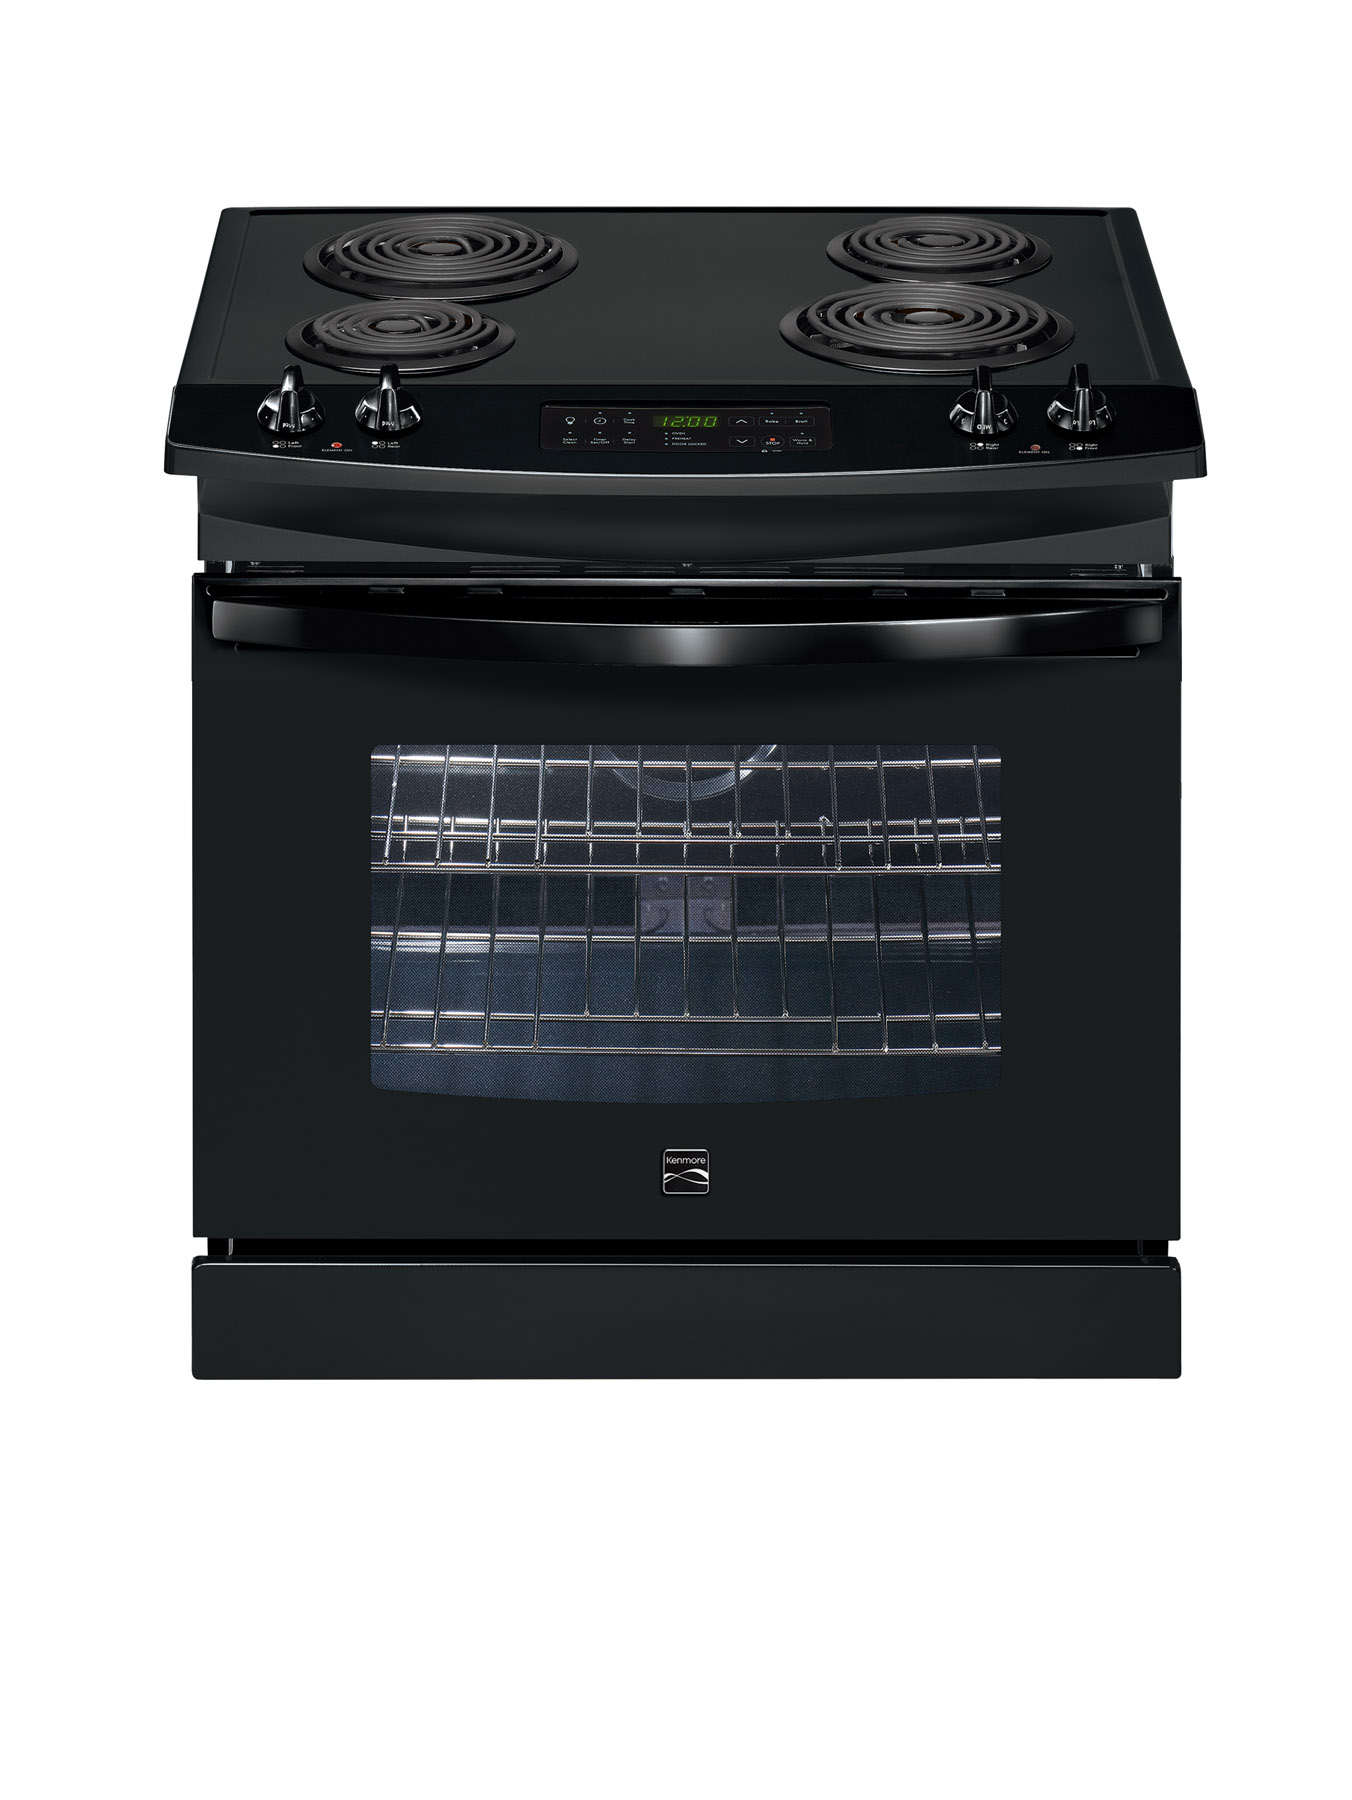 kenmore stove 970-606020 manual troubleshooting